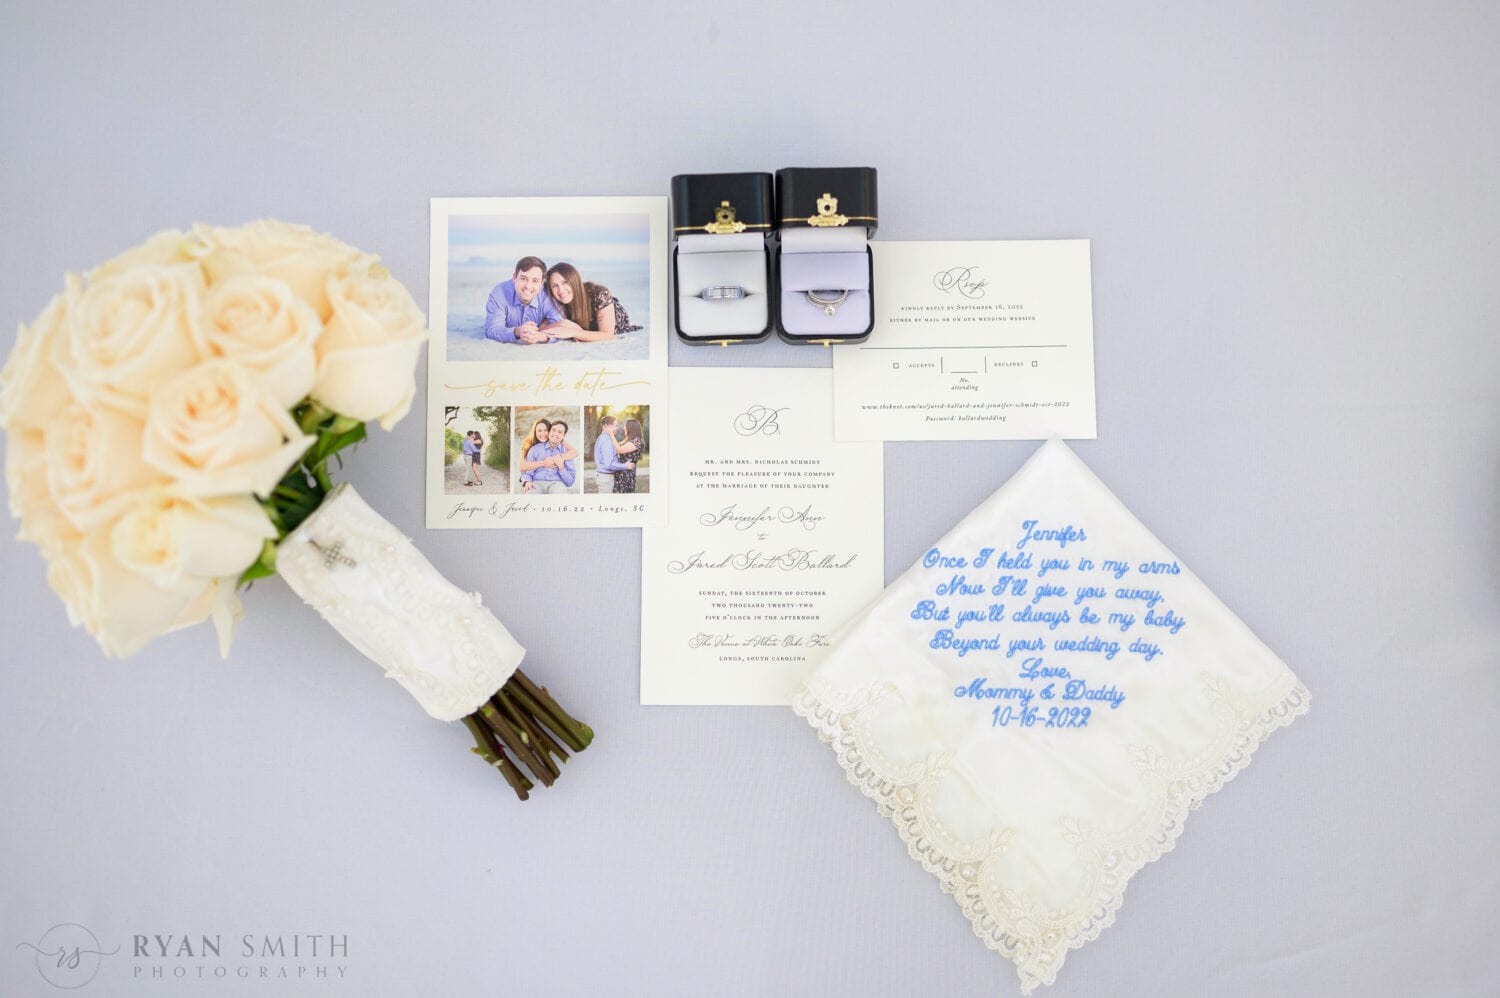 Wedding details - The Venue at White Oaks Farm